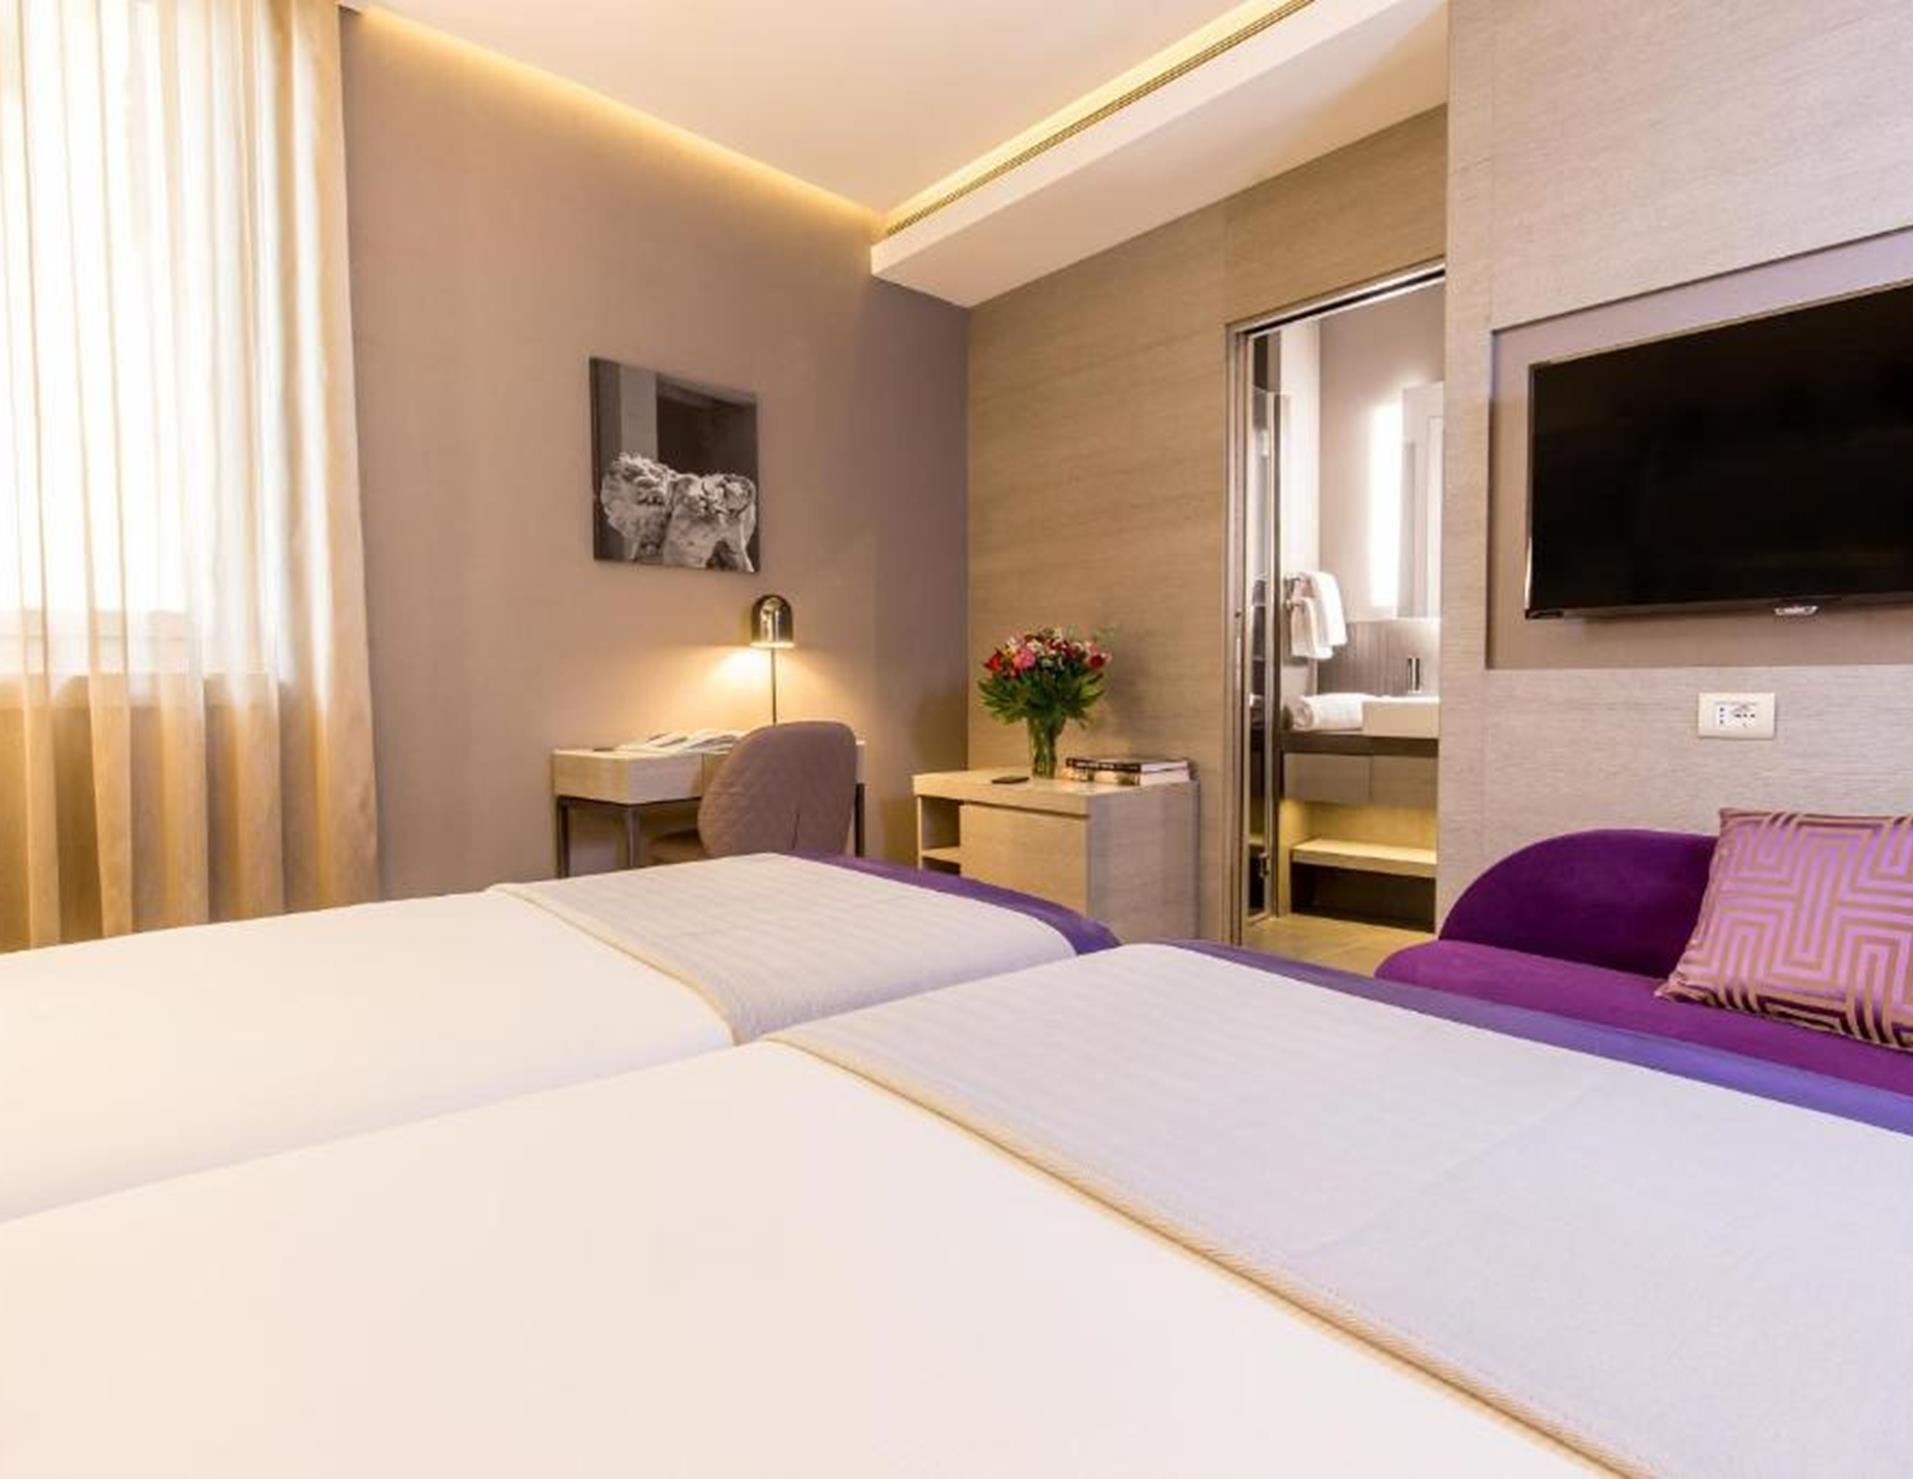 Orazio Palace Hotel - Room 7